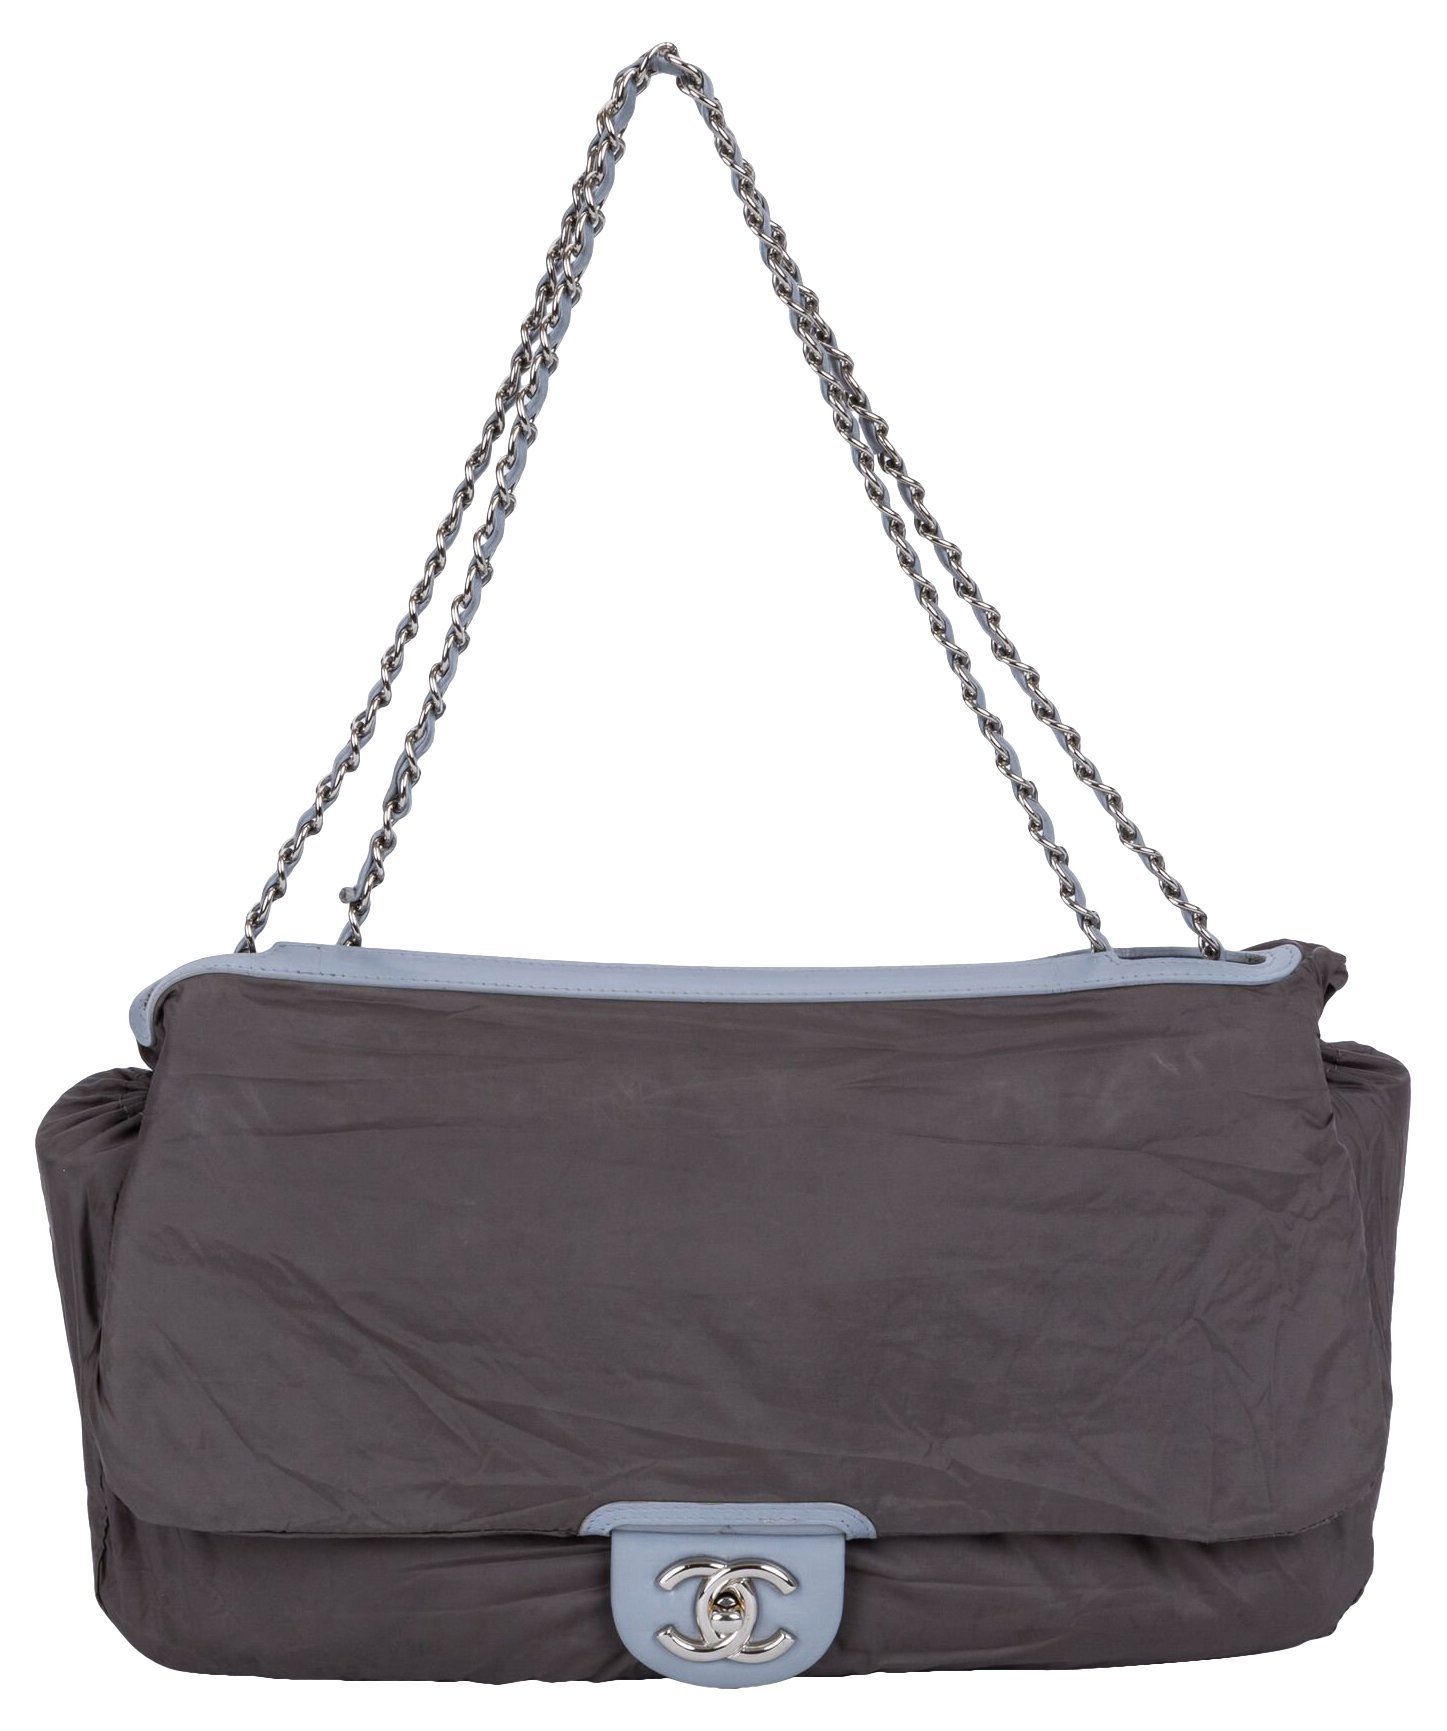 Chanel's Handbag Raincoat - BagAddicts Anonymous